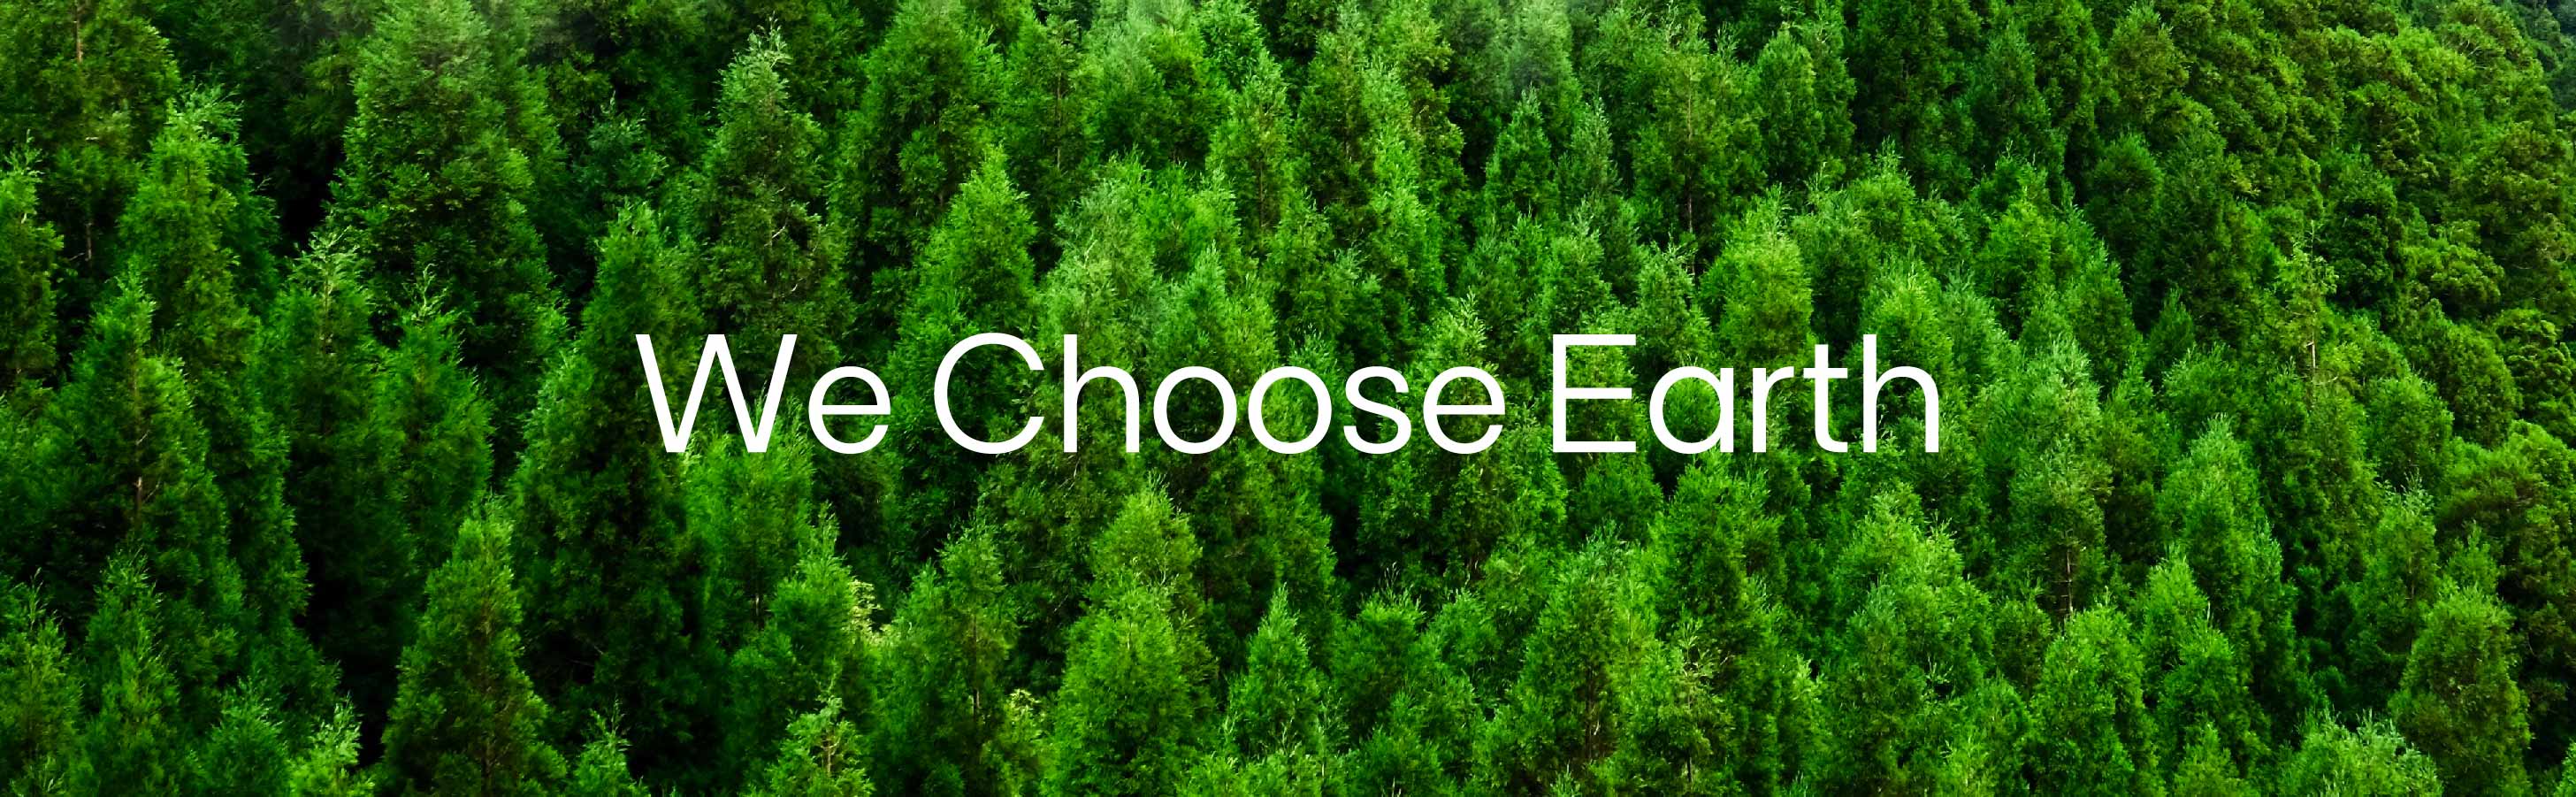 we choose earth 